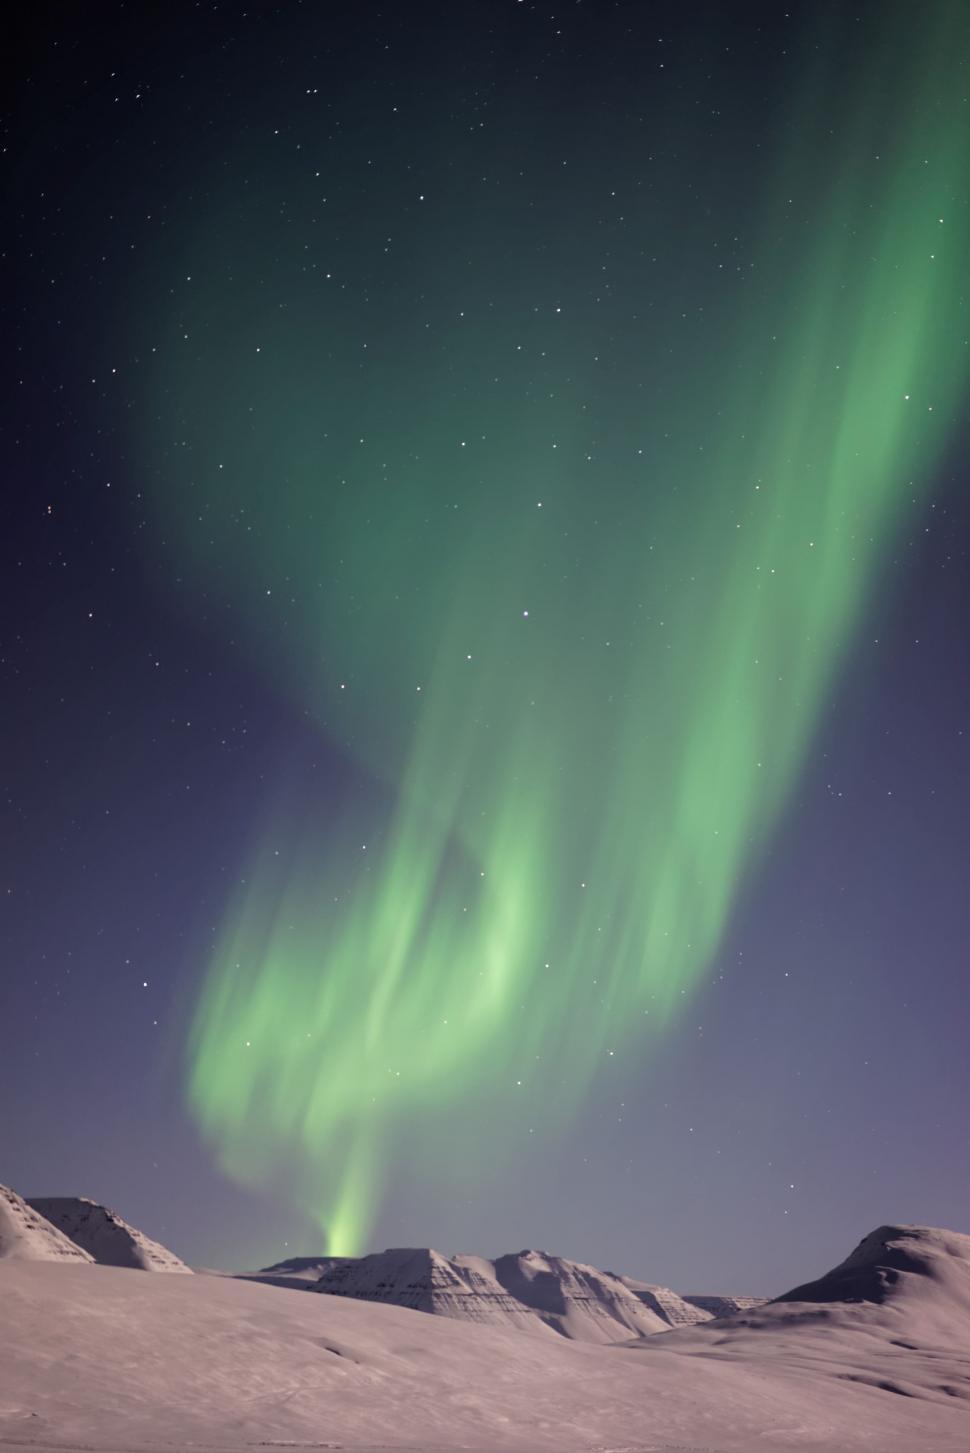 Free Image of Polar lights in Sky 